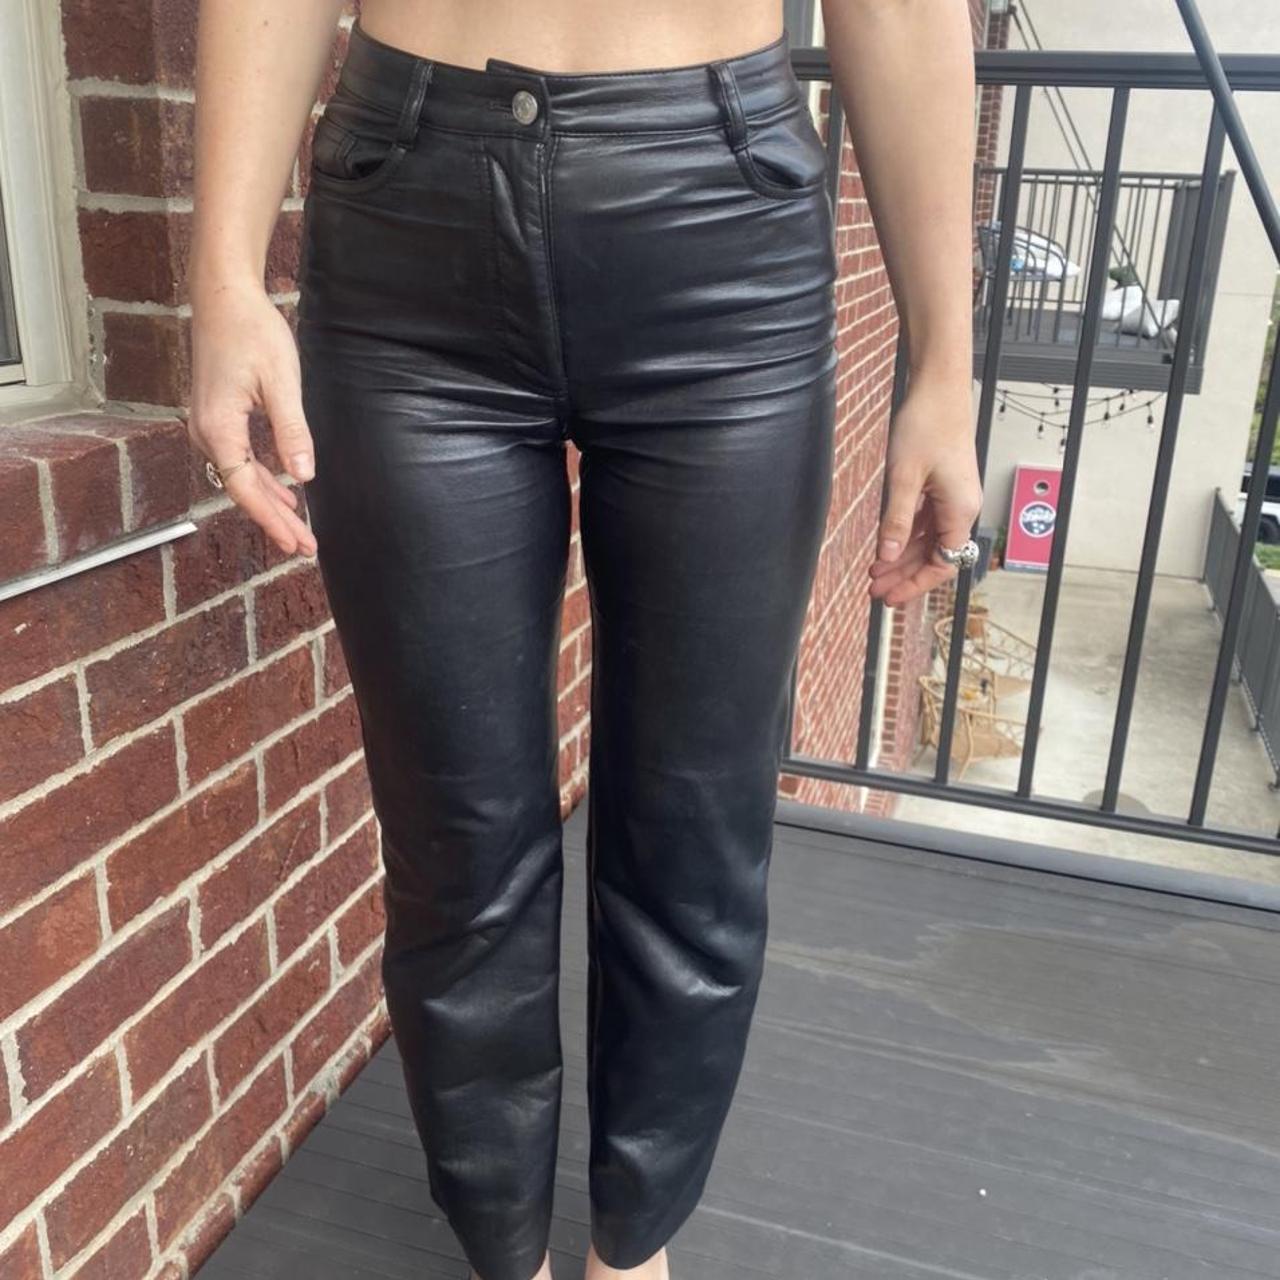 Aritzia Melina vegan leather pants 🖤 so cute and... - Depop